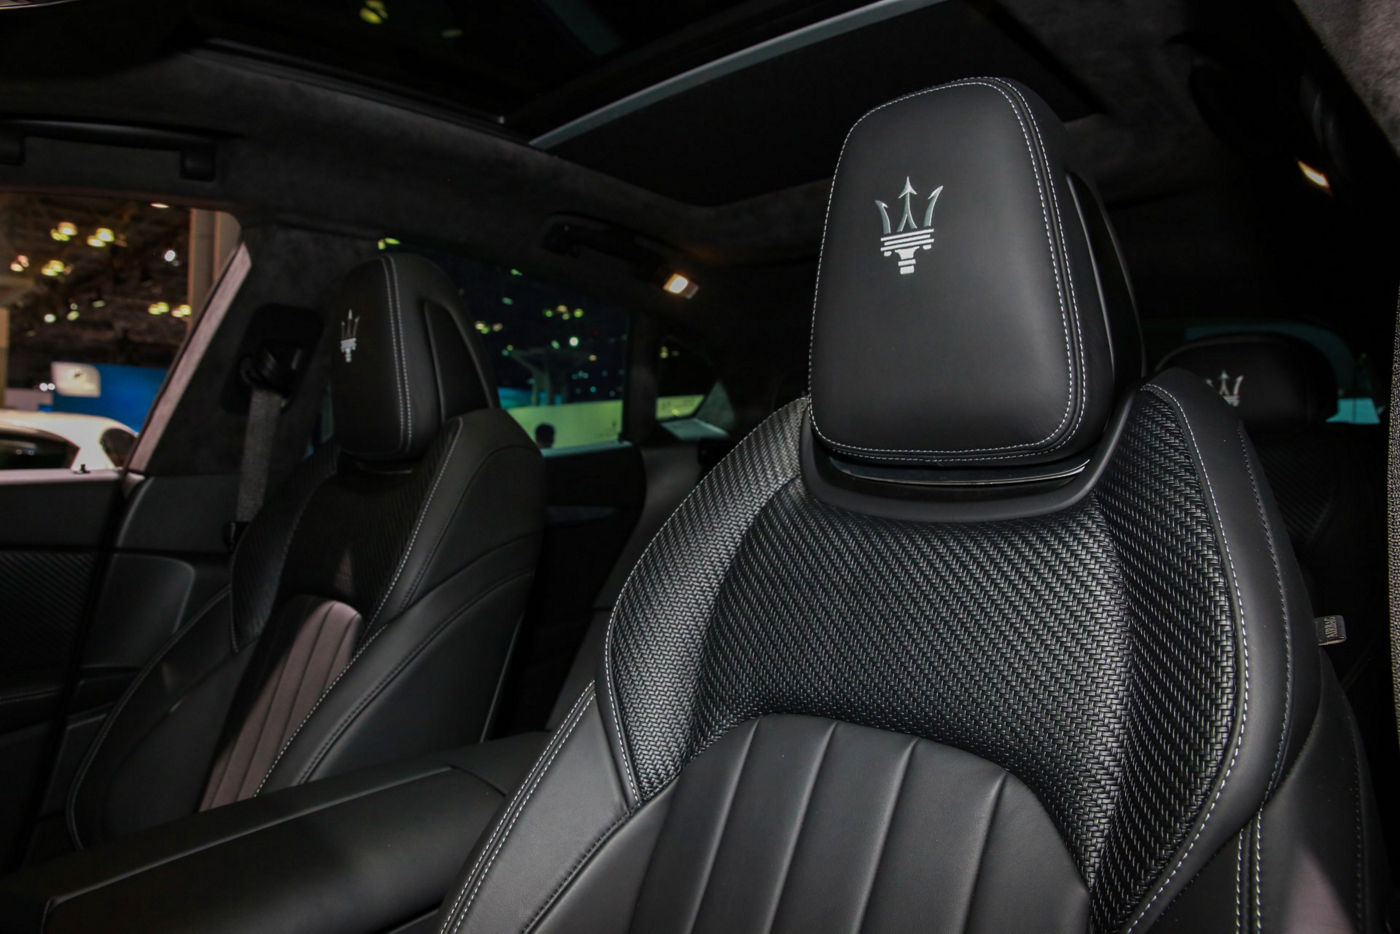 Maserati Levante Q4 GranSport - Pelletessuta™ interior by Zegna and headrests with Maserati logos